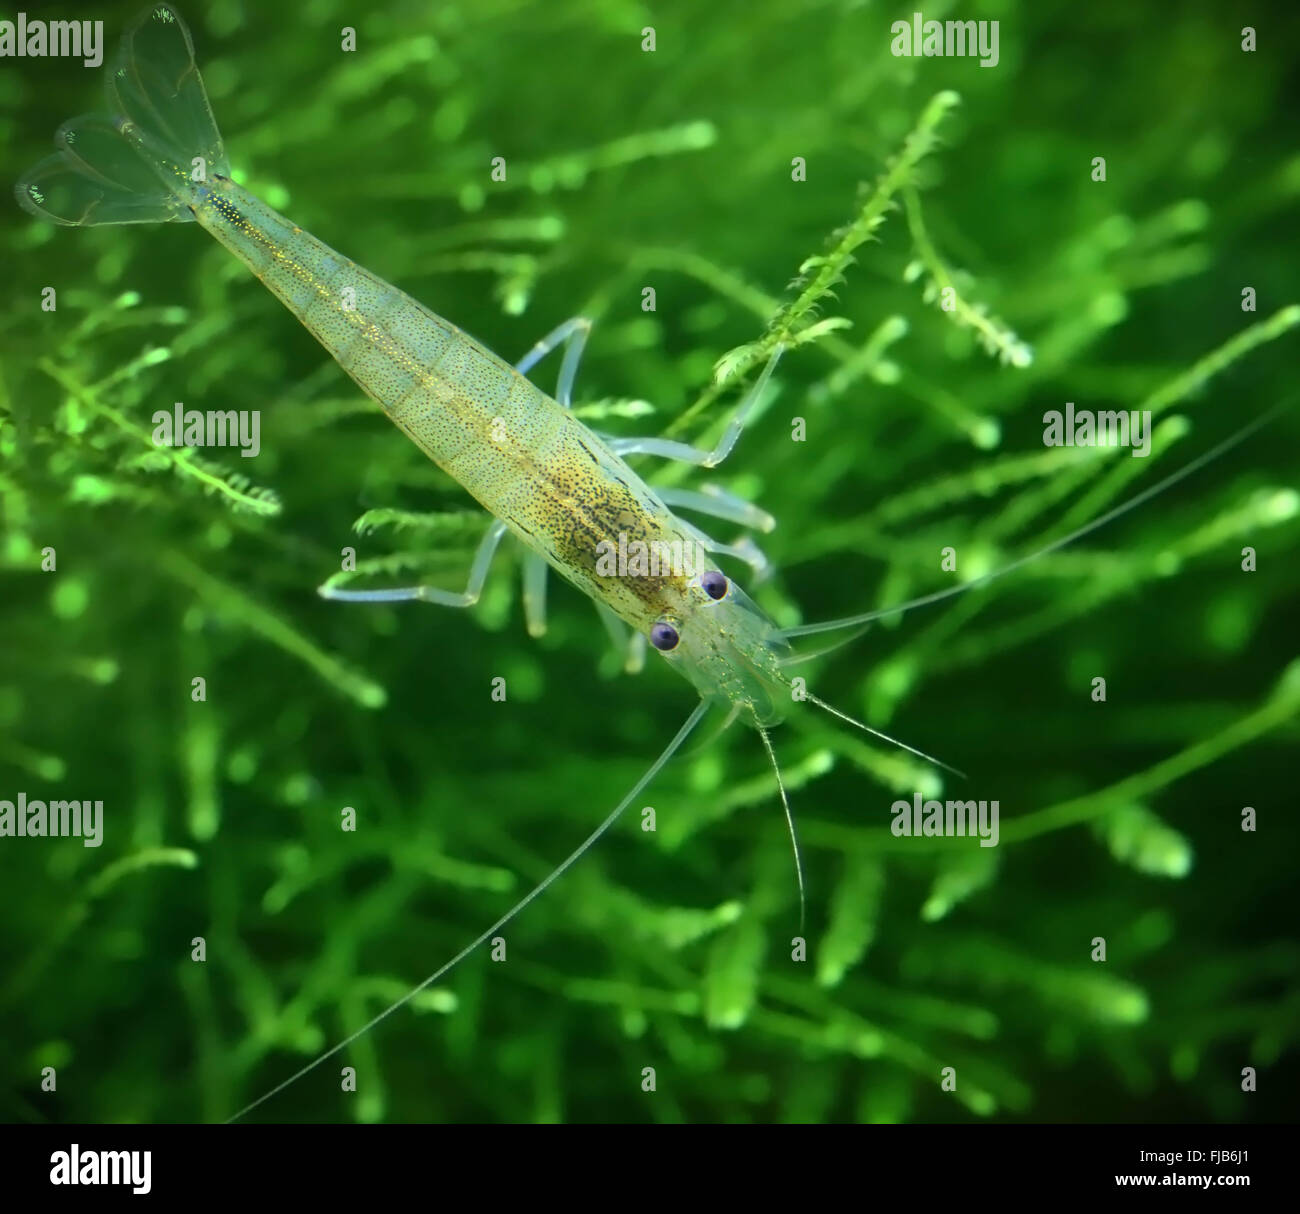 Yamato shrimp on java moss in a planted aquarium Stock Photo